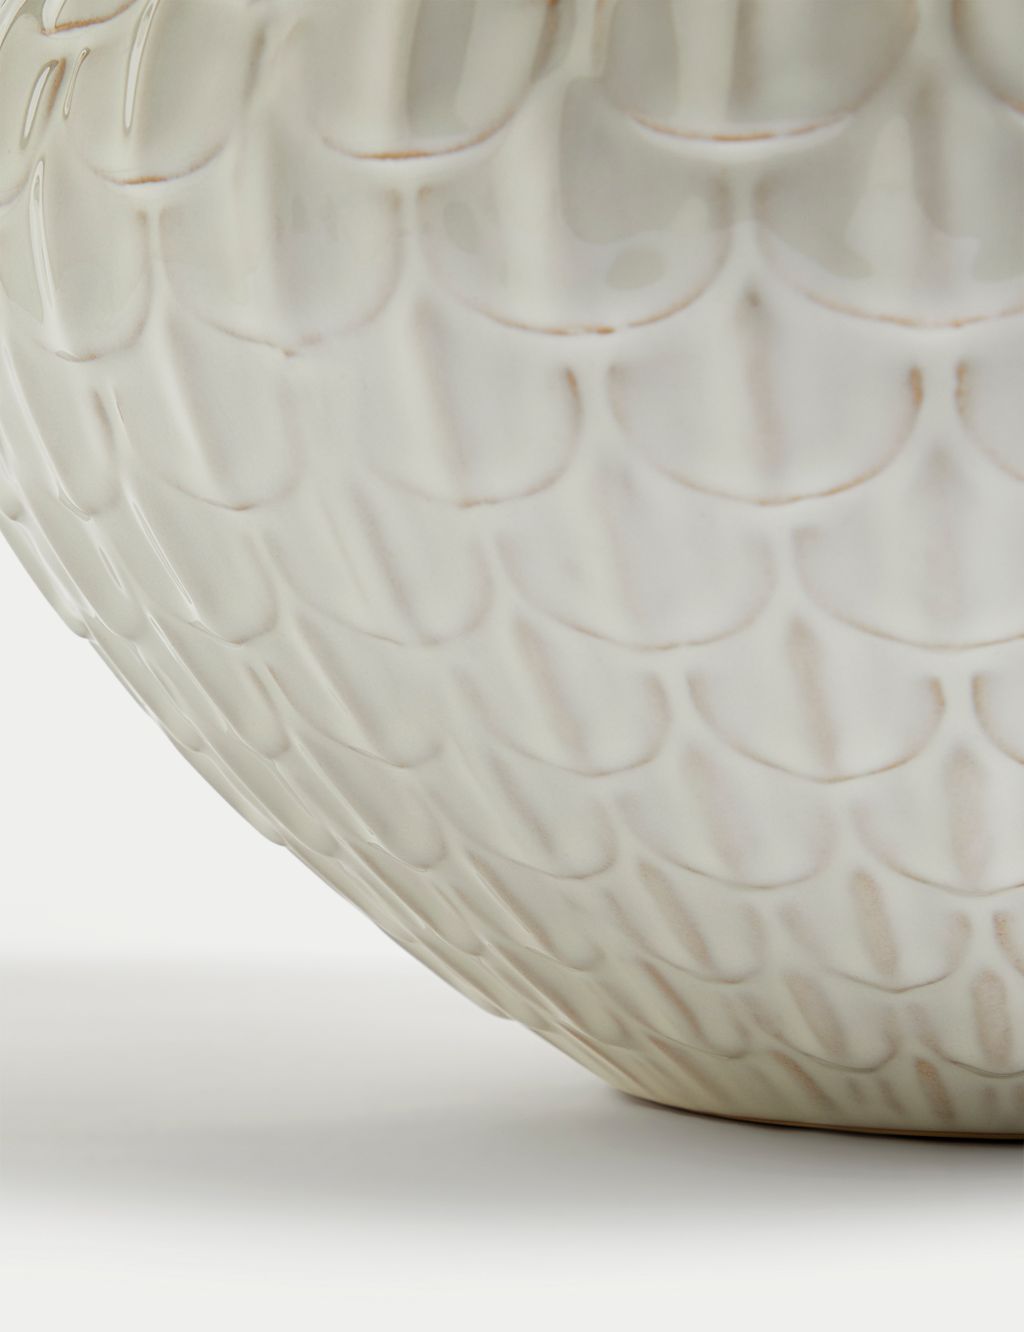 Medium Scalloped Textured Vase 7 of 9